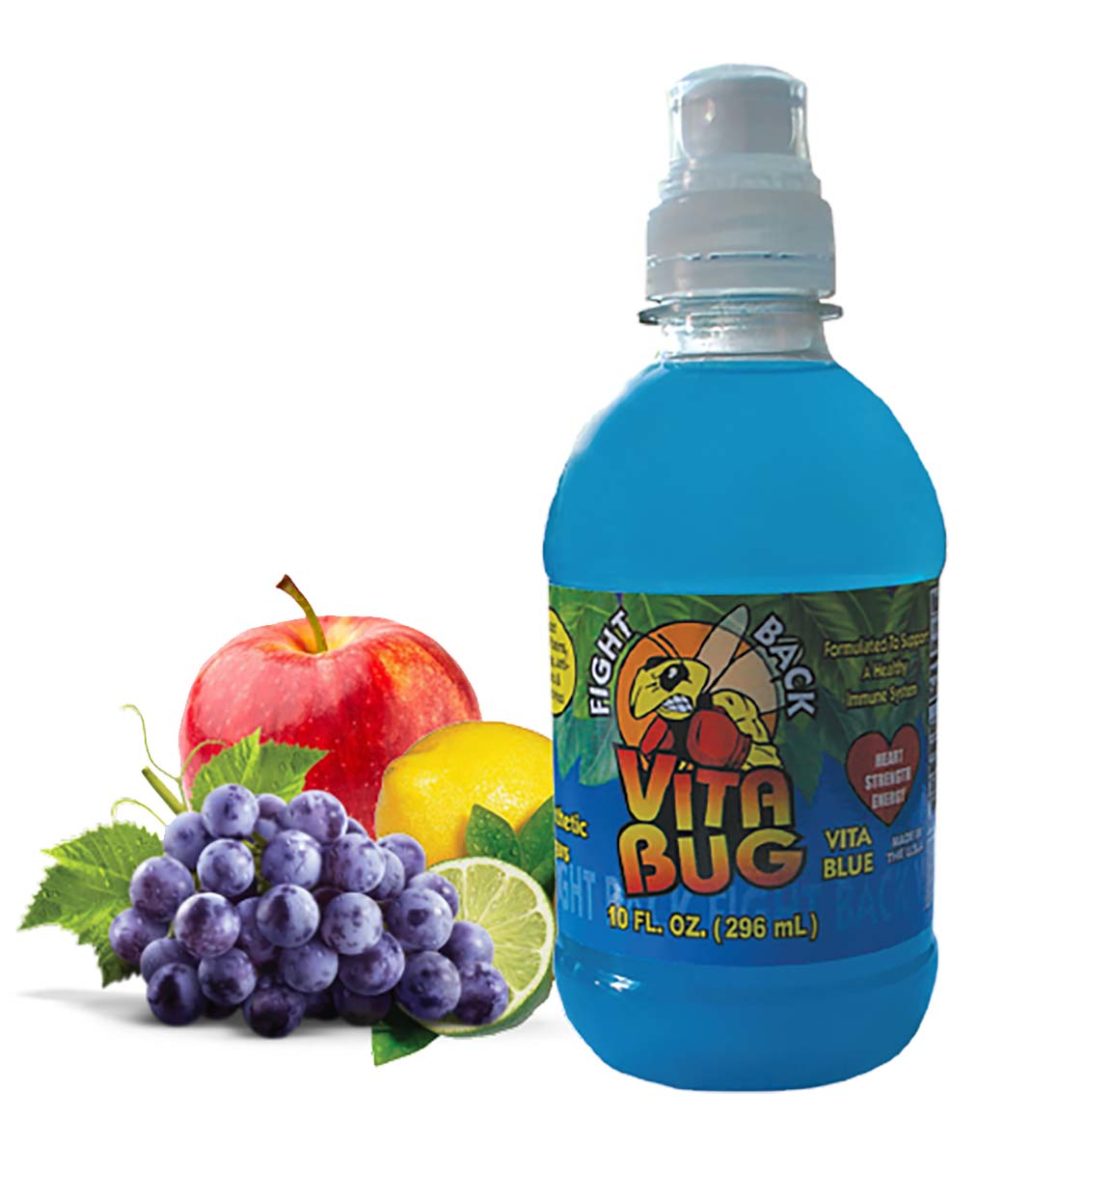 Vita Bug